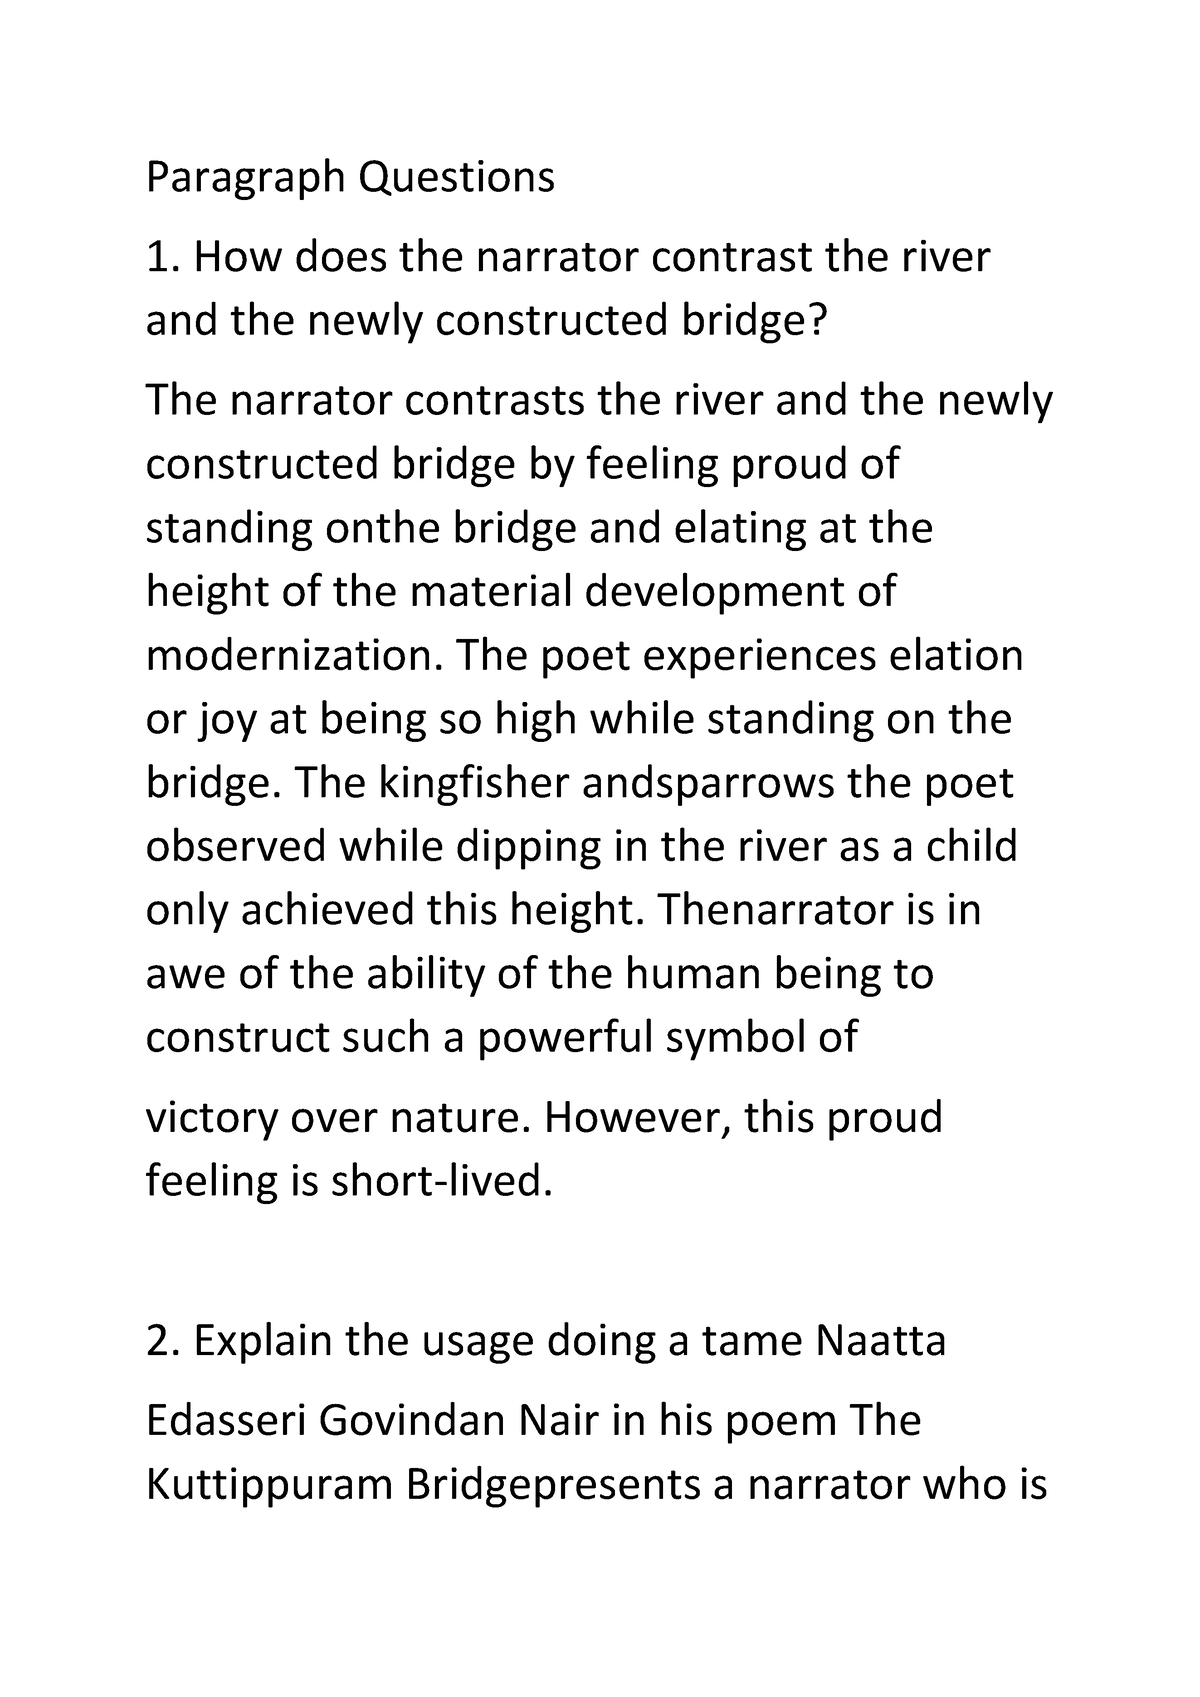 the kuttippuram bridge poem essay questions and answers